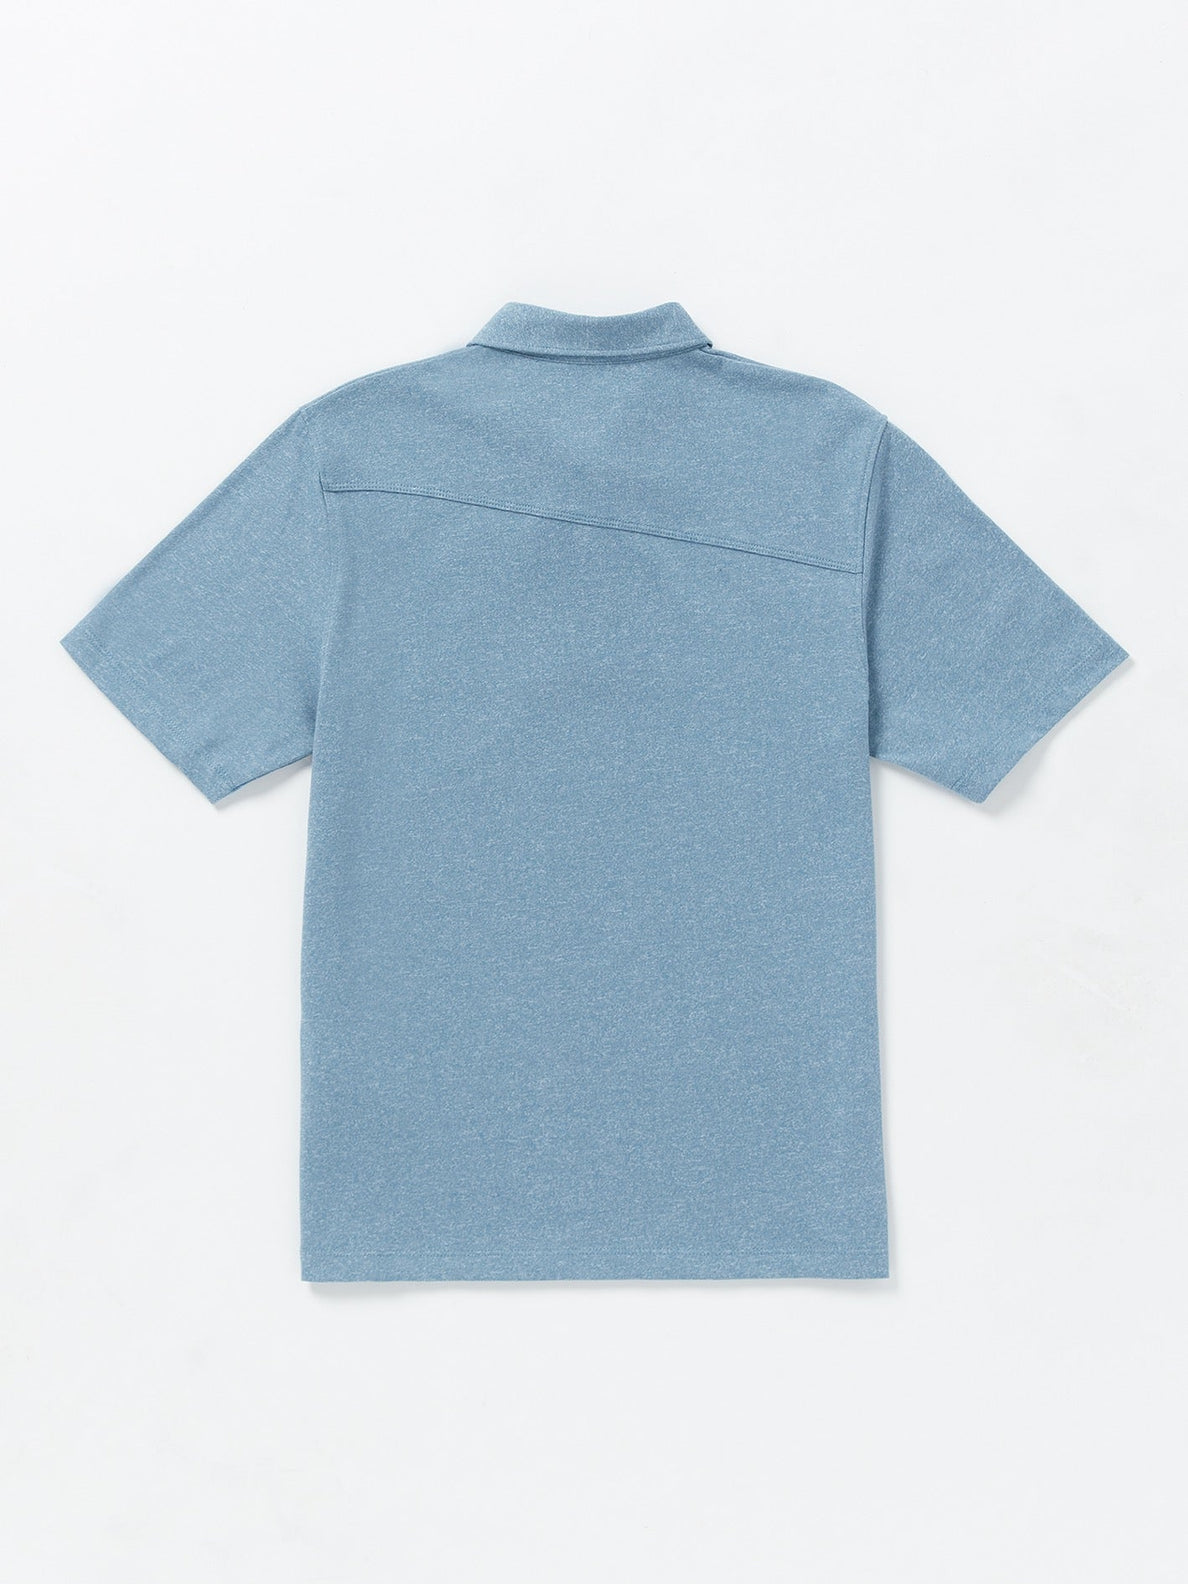 Big Boys Wowzer Polo Short Sleeve Shirt - Stone Blue